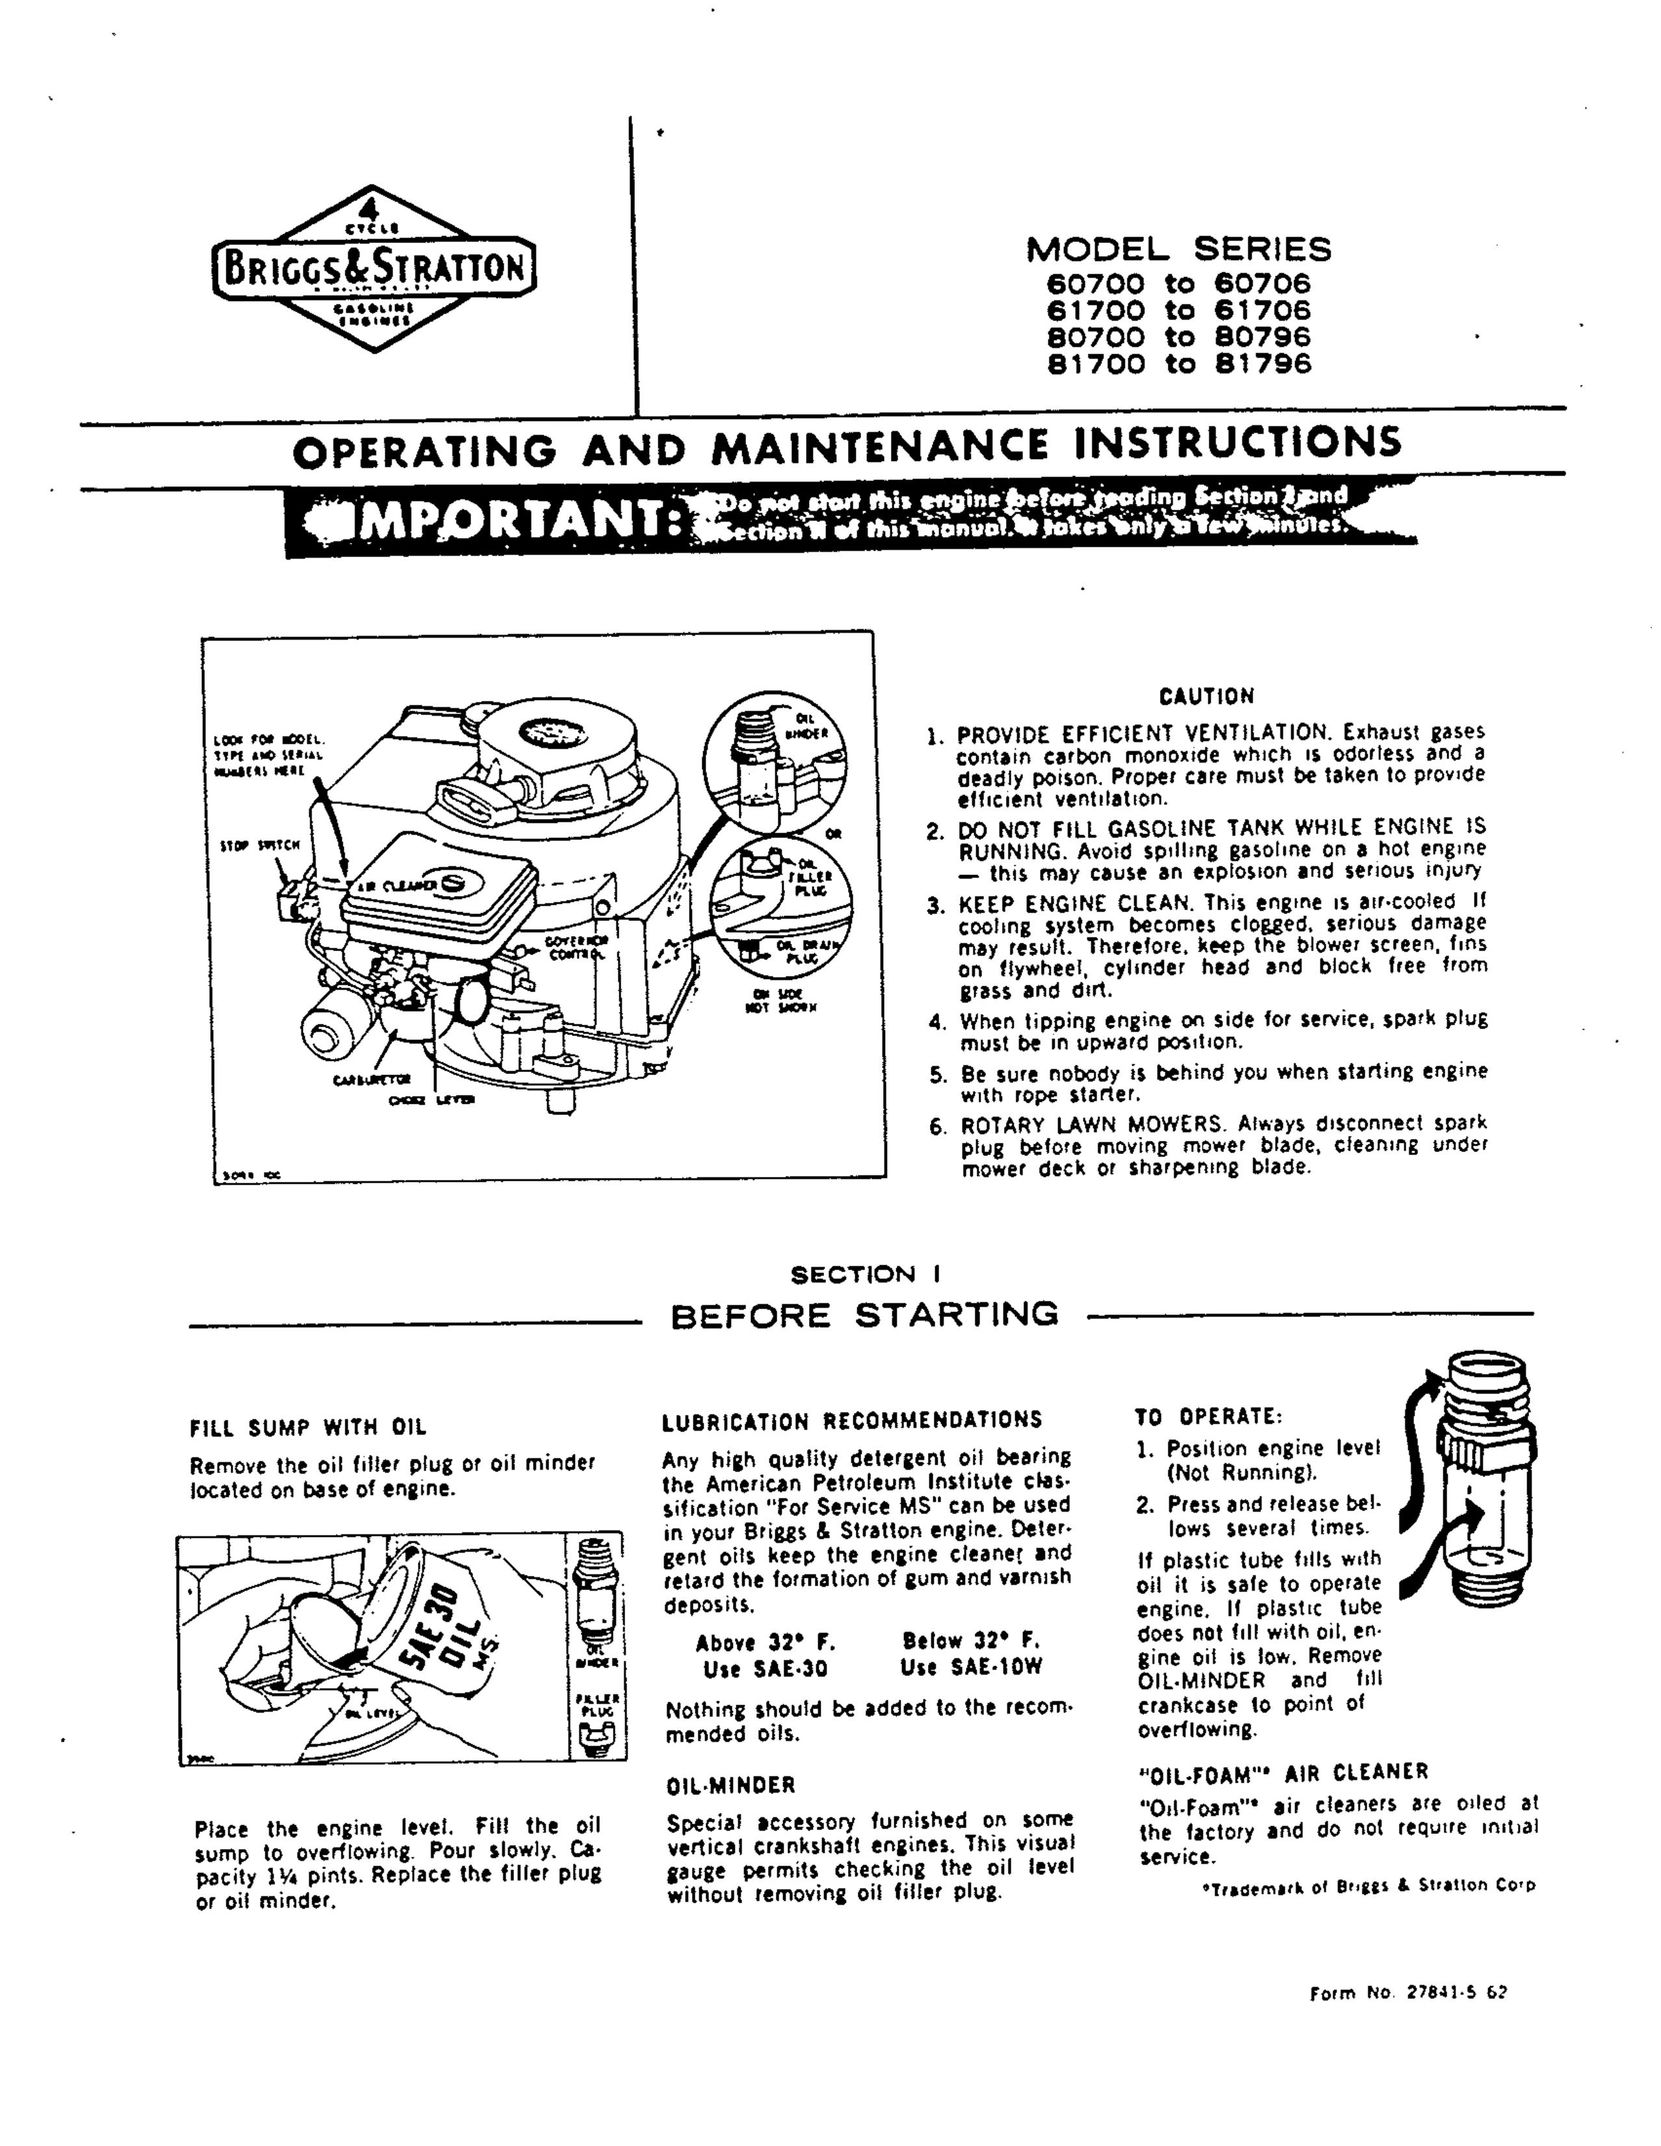 Briggs & Stratton 60700 - 60706 Building Set User Manual